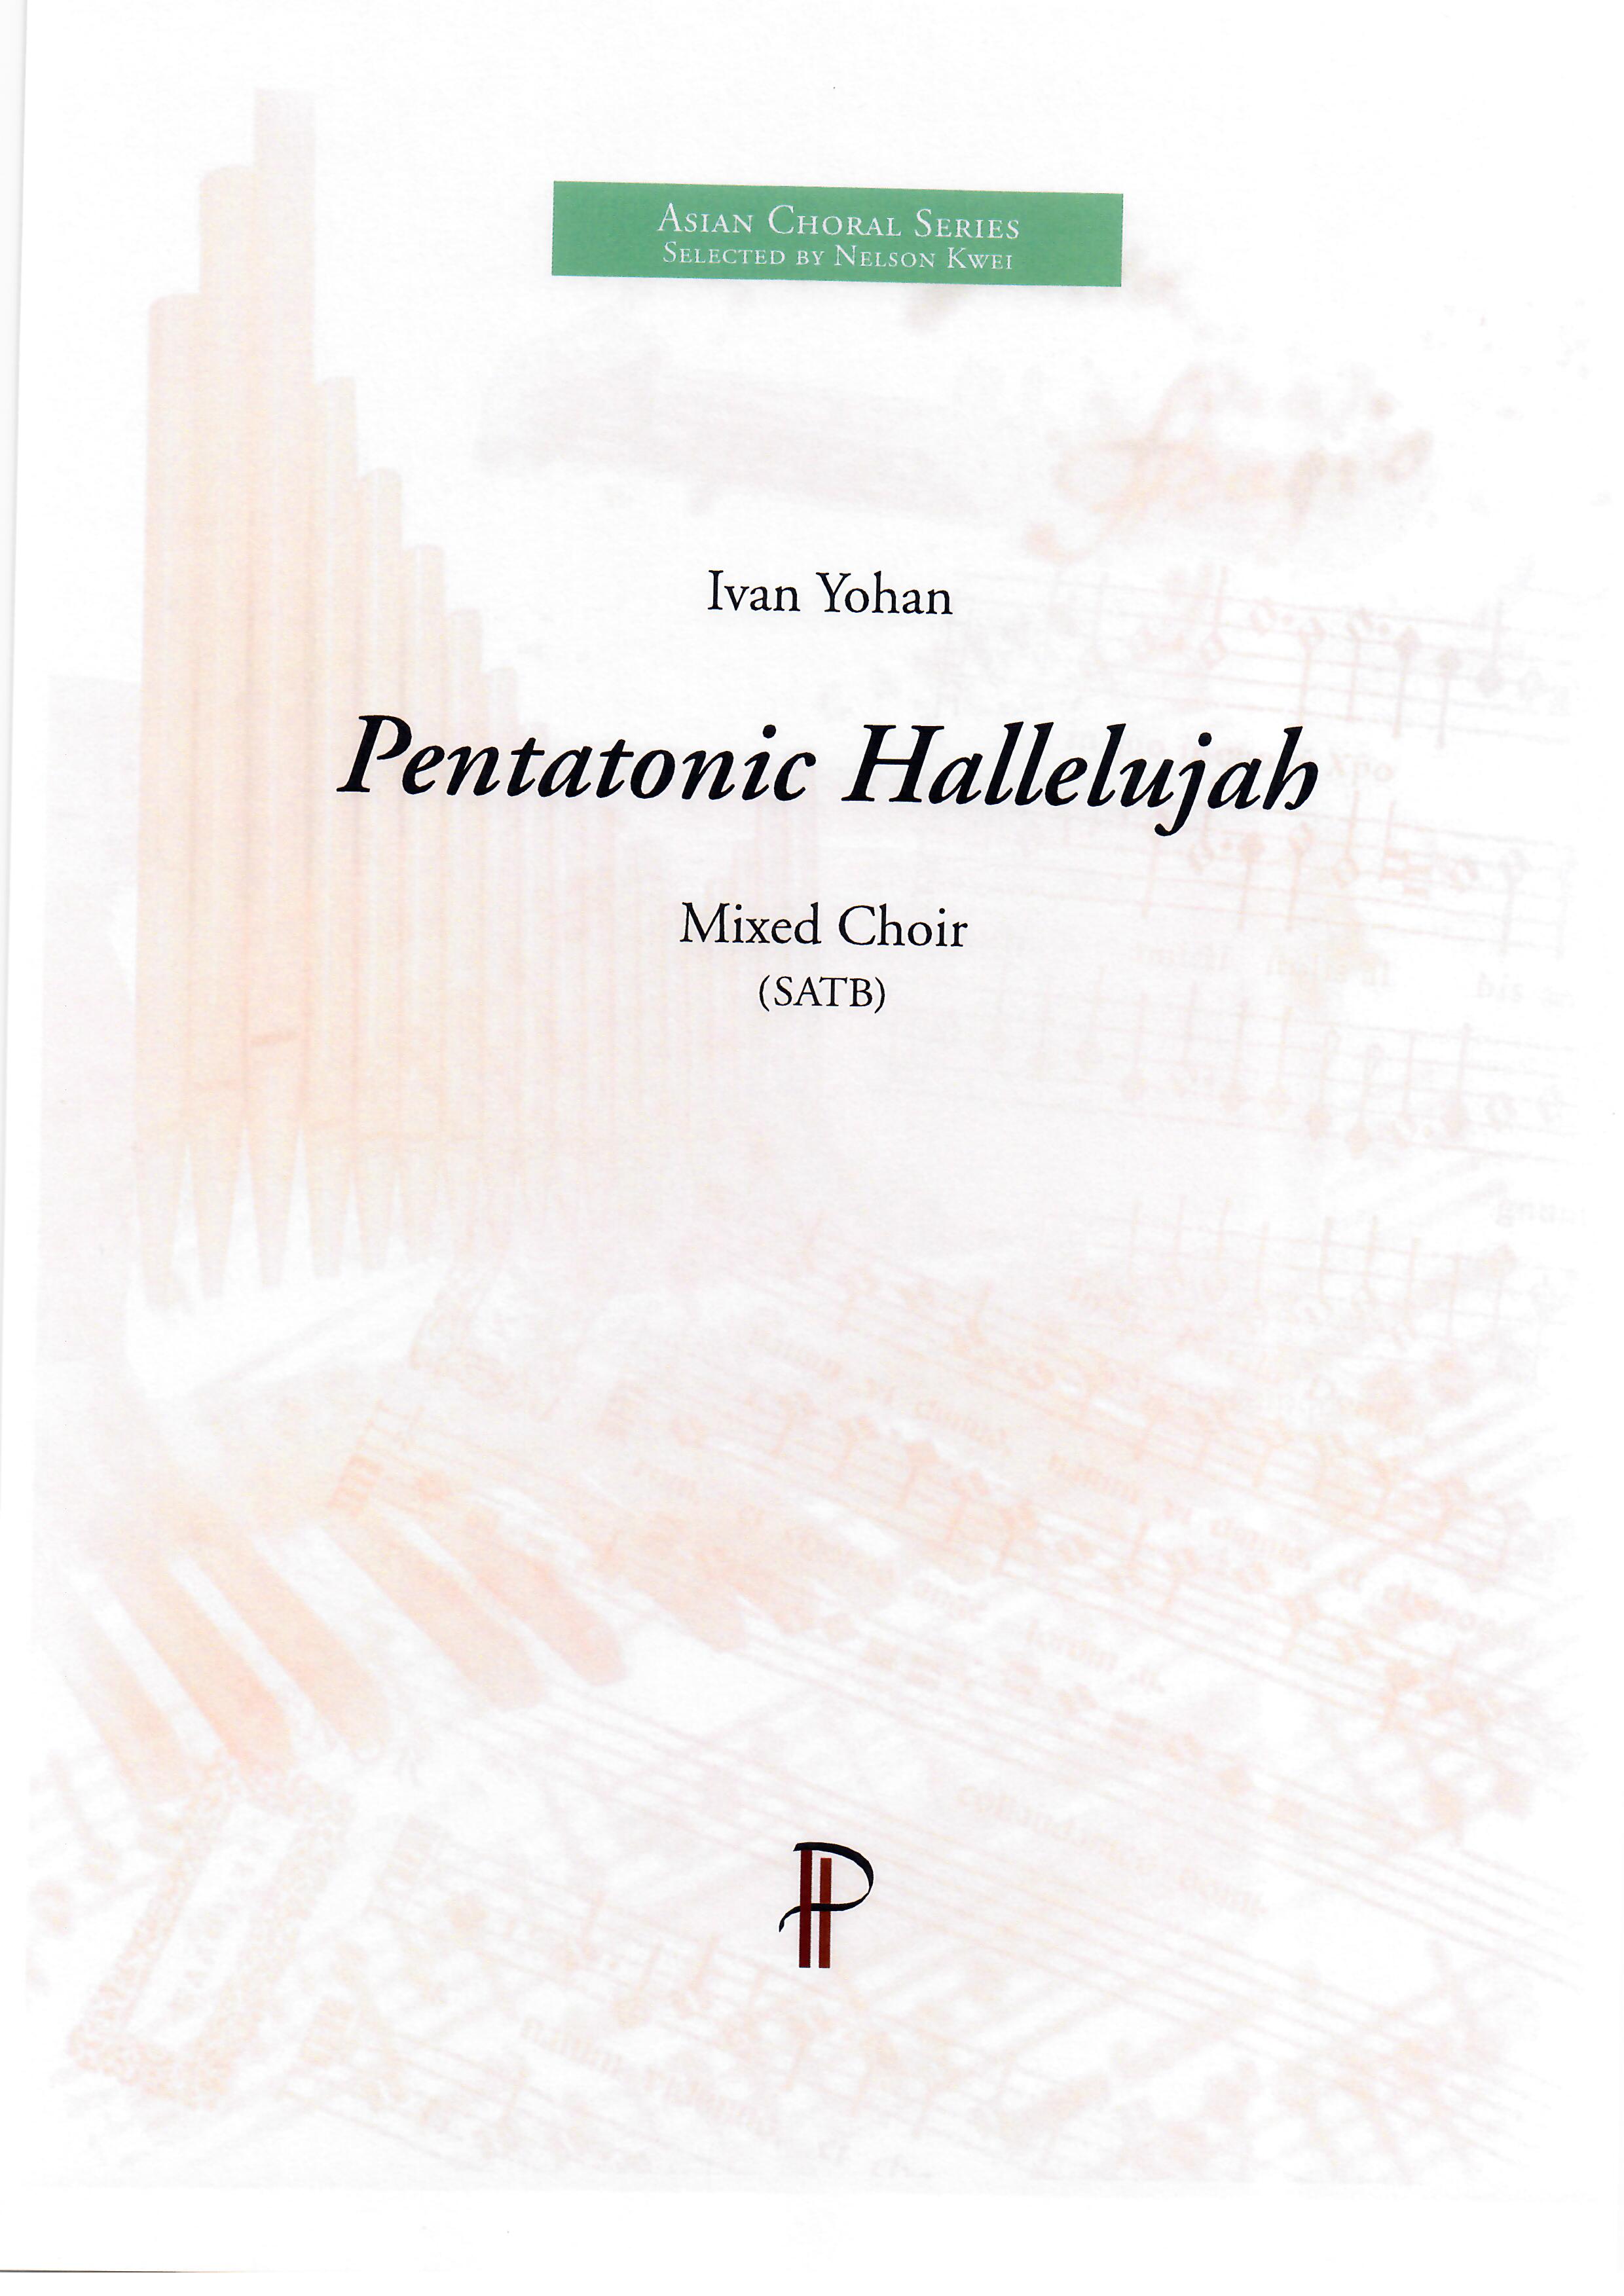 Pentatonic Hallelujah - Show sample score